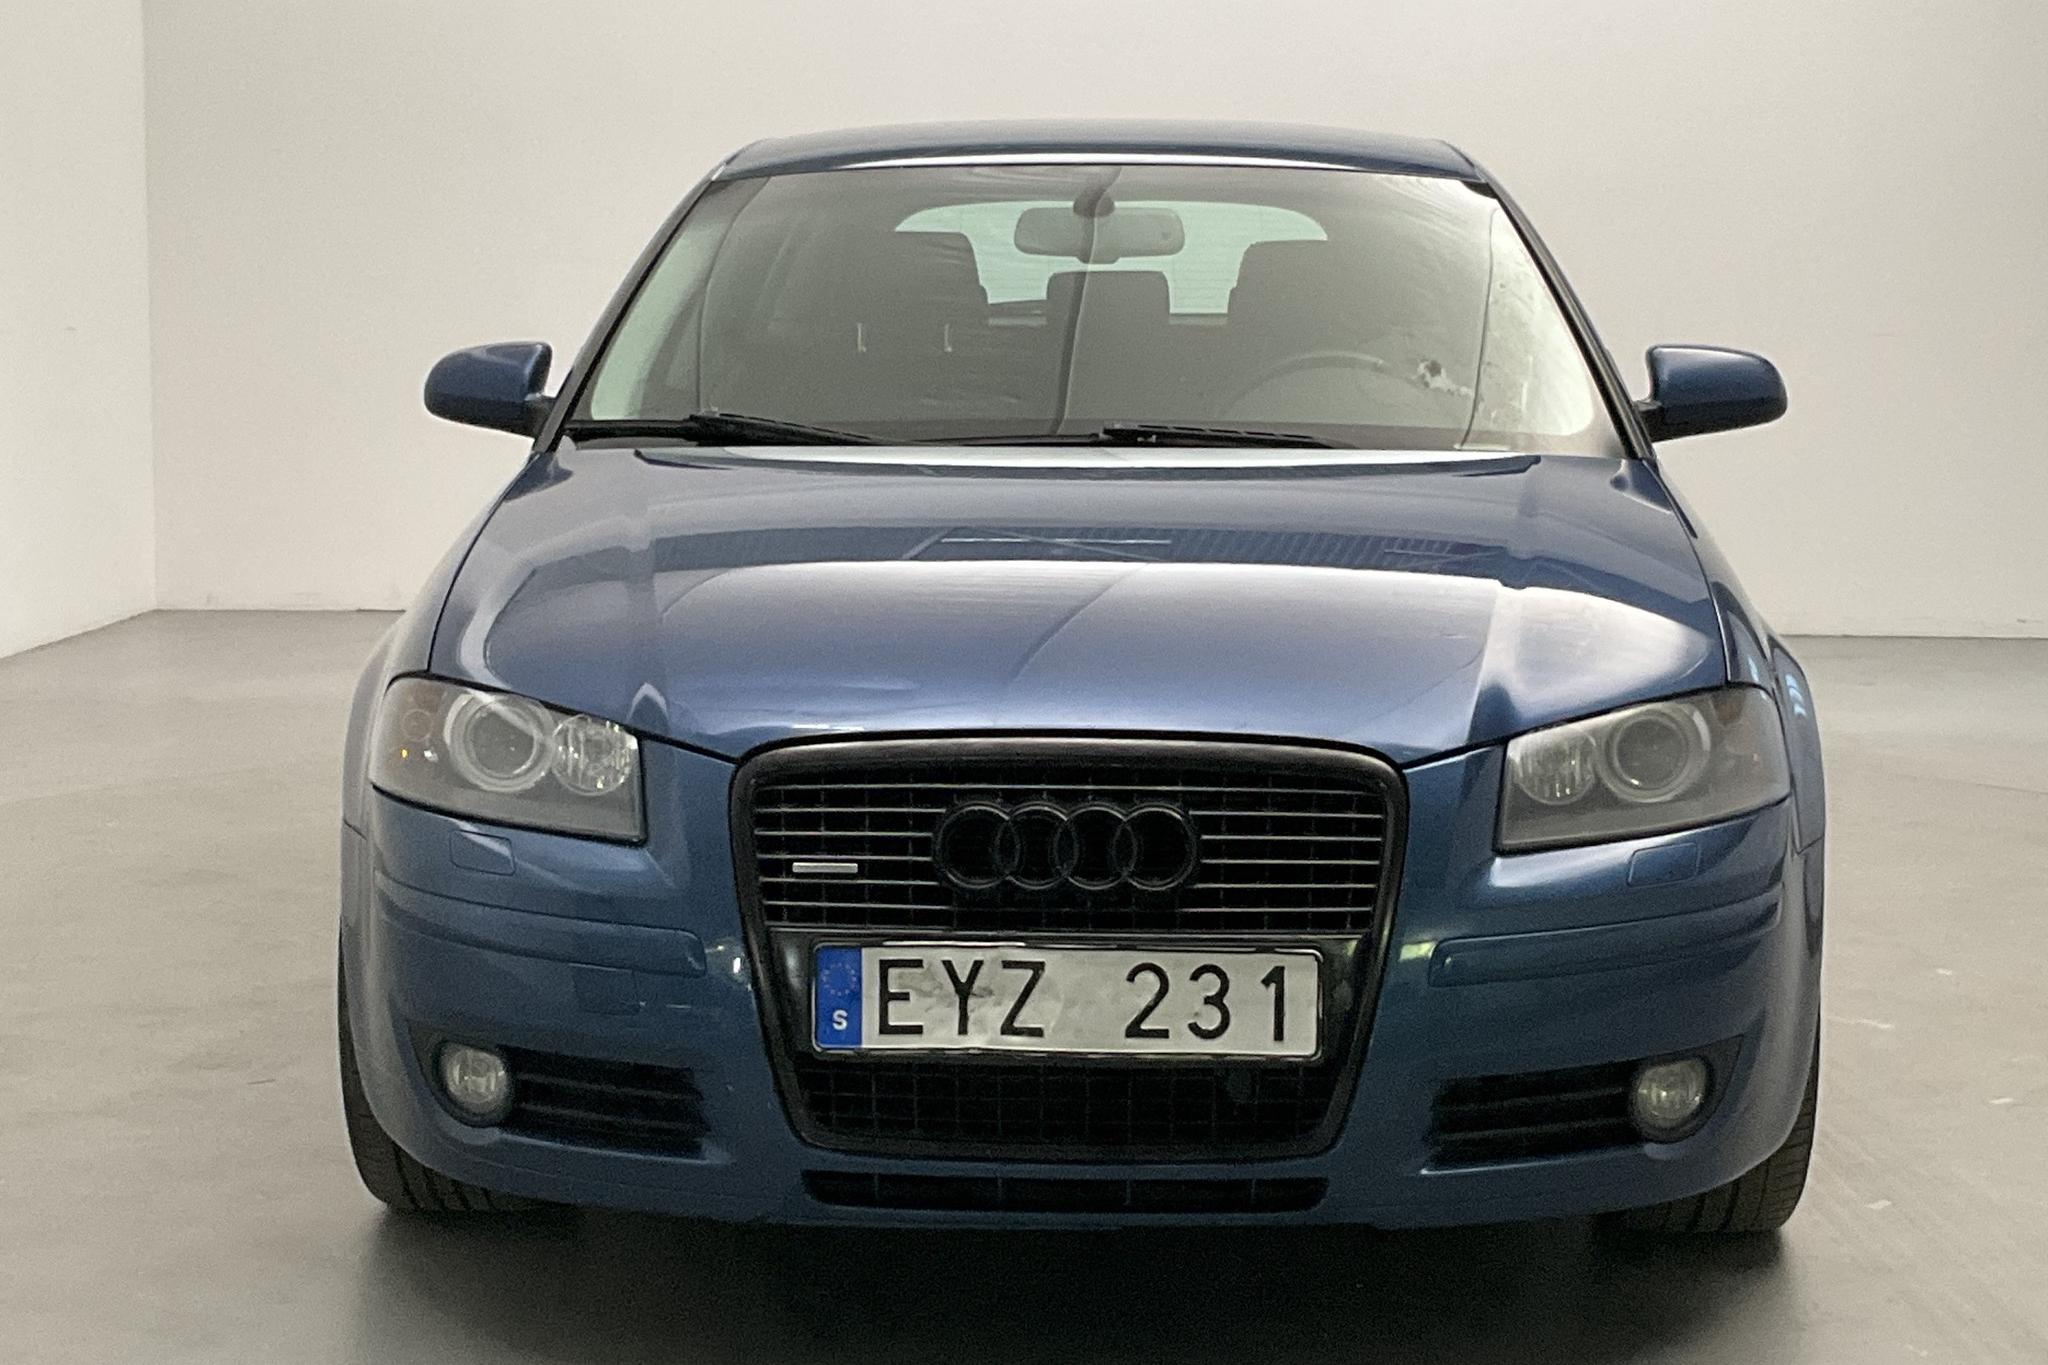 Audi A3 2.0 TDI Sportback quattro (140hk) - 265 840 km - Manual - Light Blue - 2007